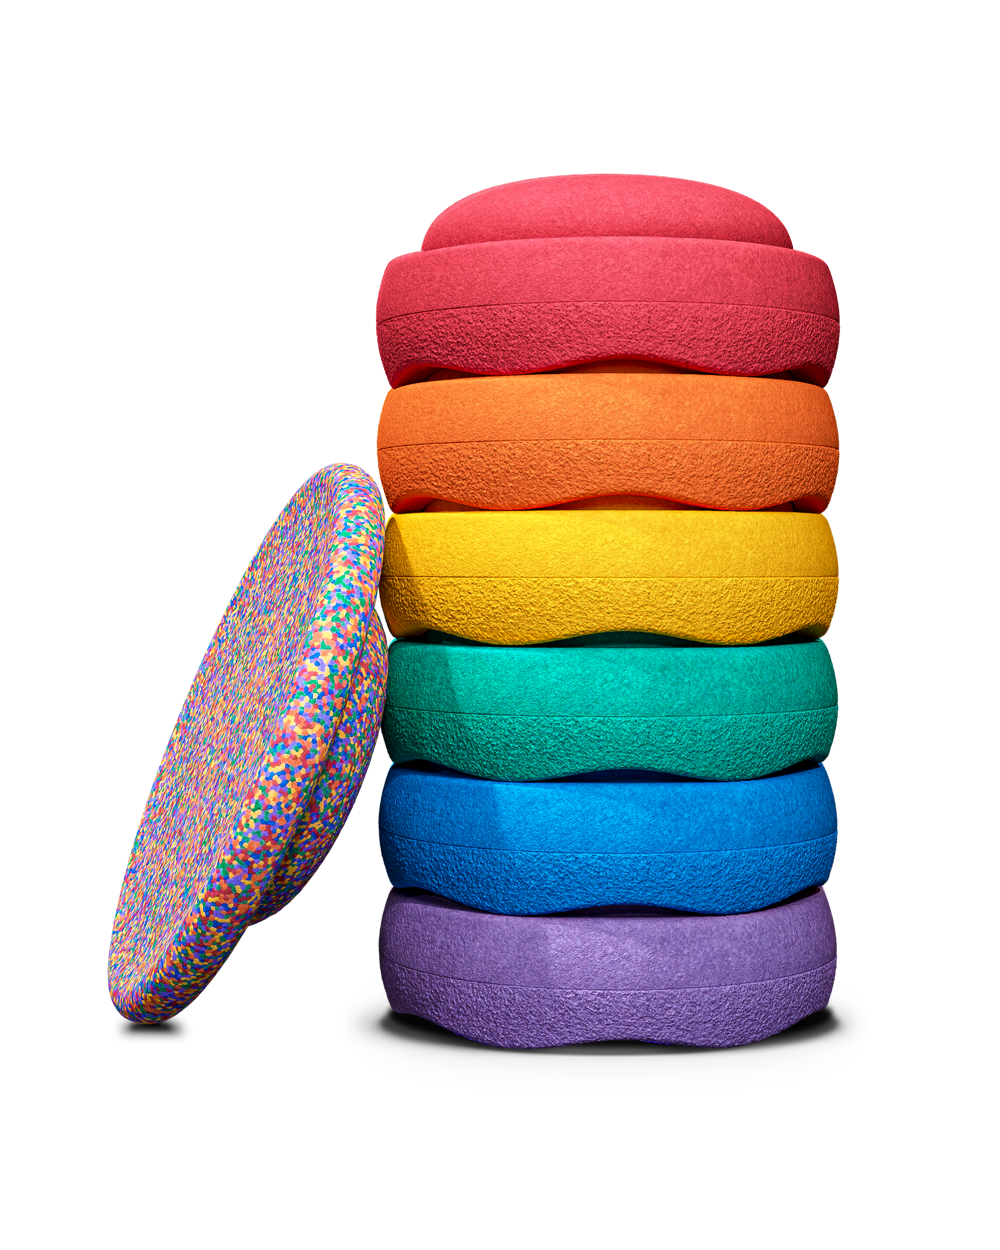 De Kinderwinkel Stapelstein Rainbow 6 + 1 gratis confetti balance board